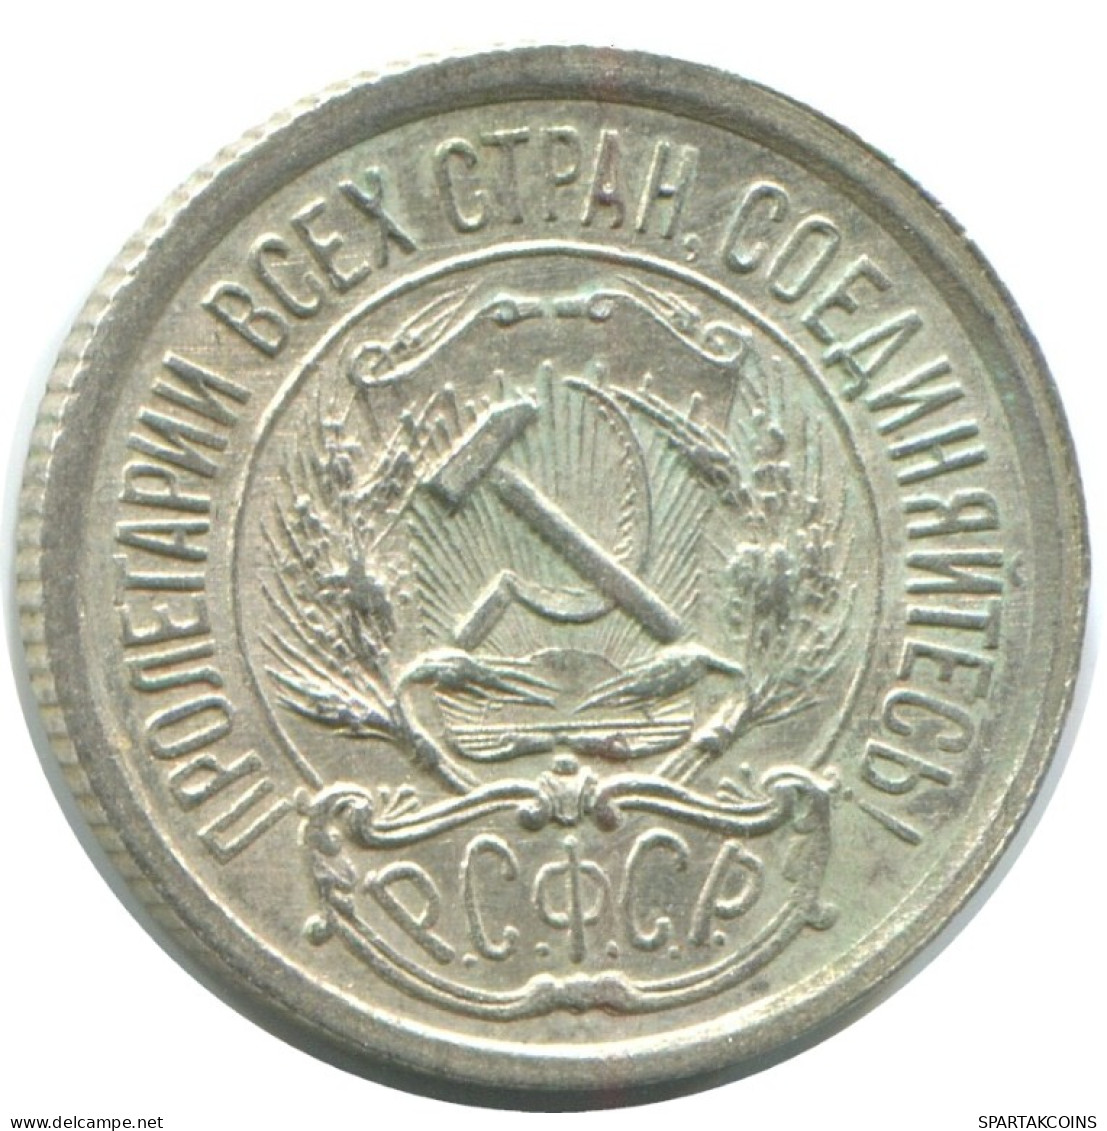 10 KOPEKS 1923 RUSIA RUSSIA RSFSR PLATA Moneda HIGH GRADE #AE929.4.E.A - Russie